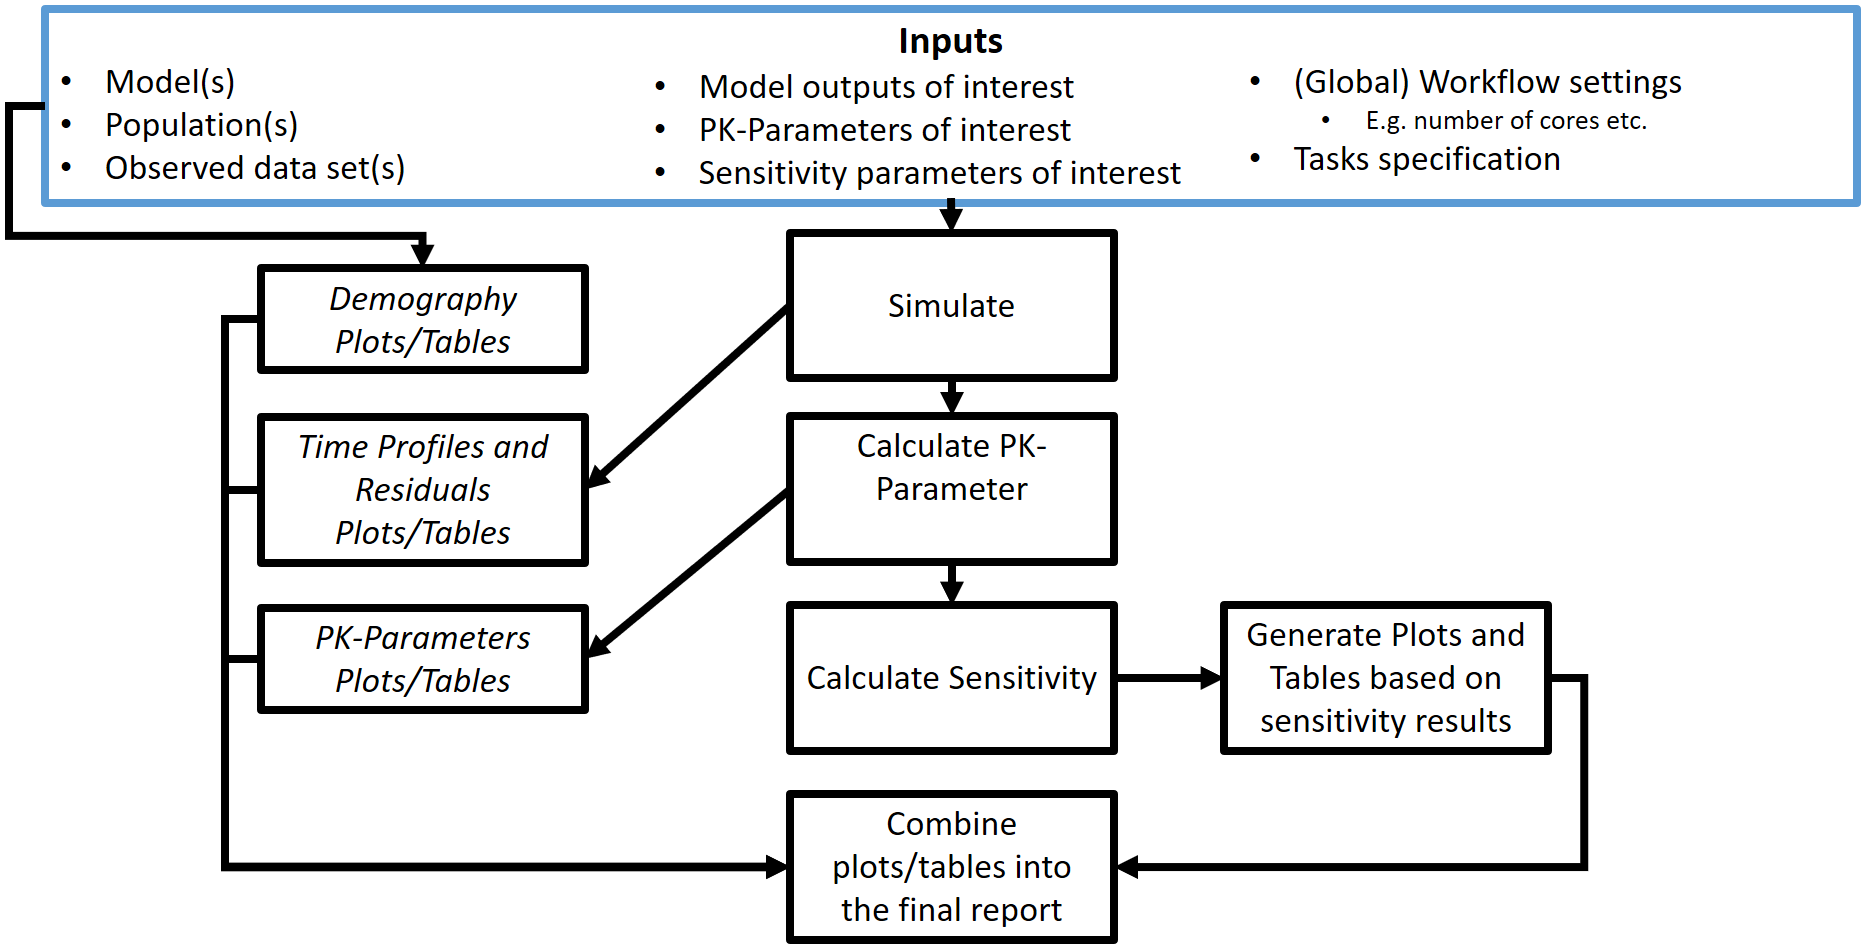 Figure 2: Population workflow inputs and tasks